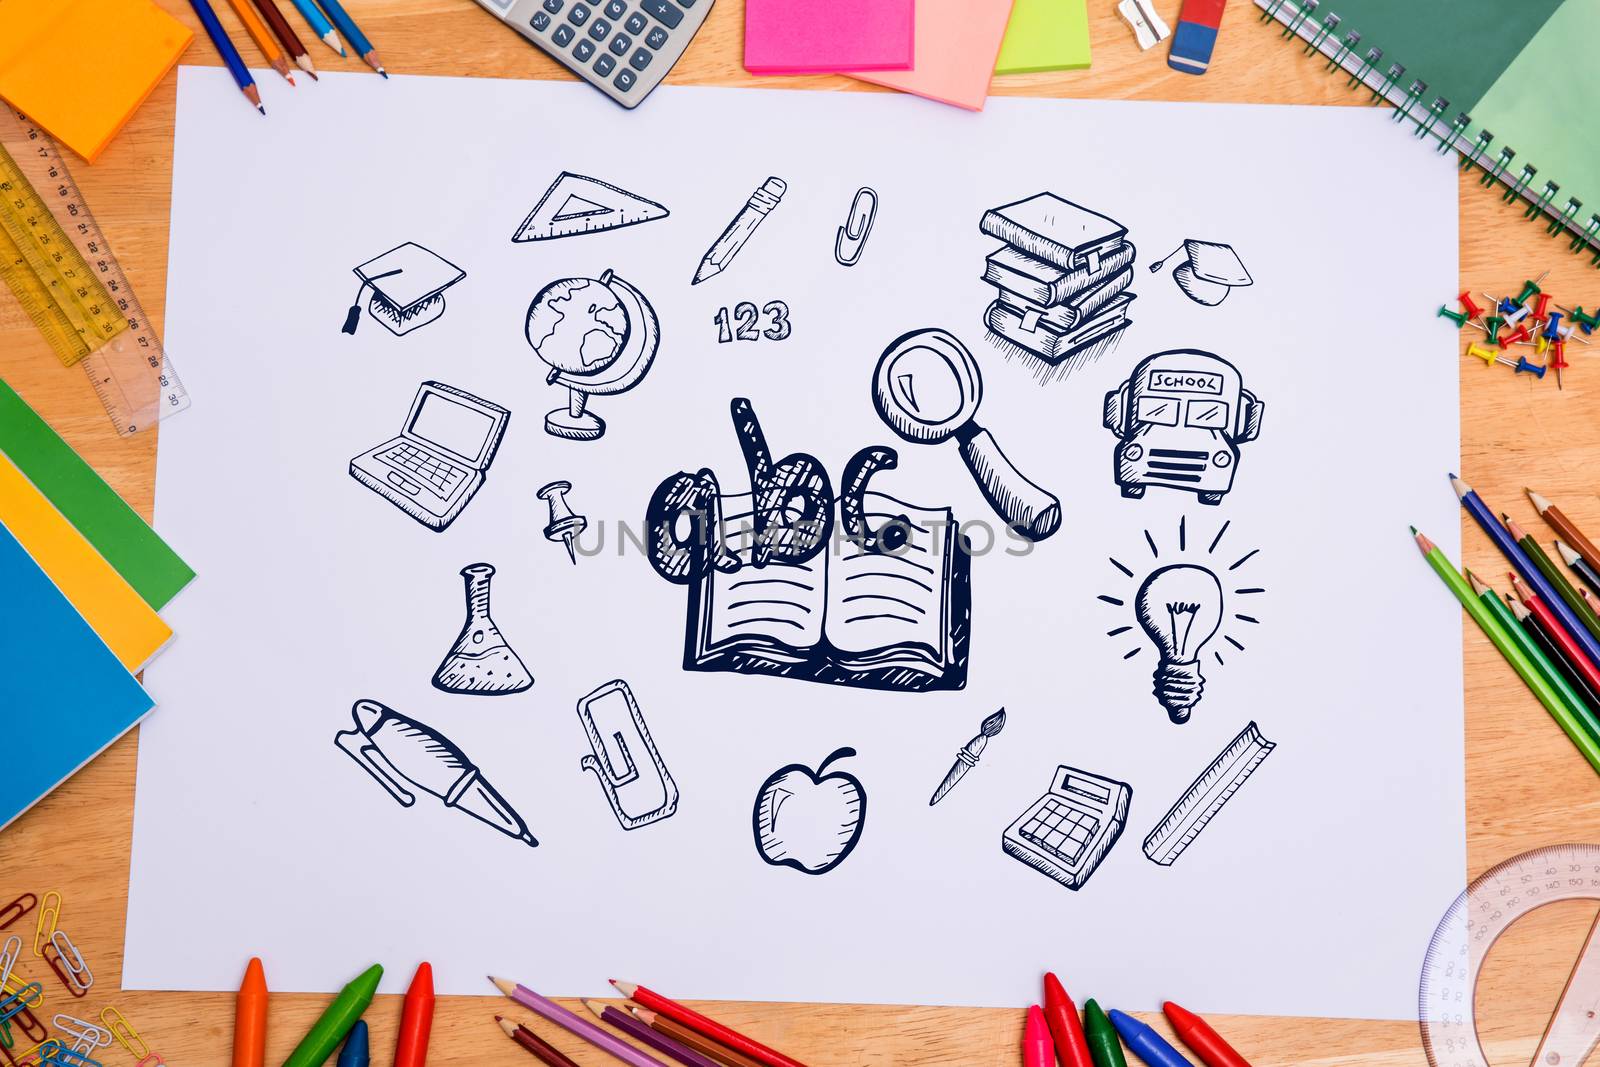 Composite image of education doodles against students desk